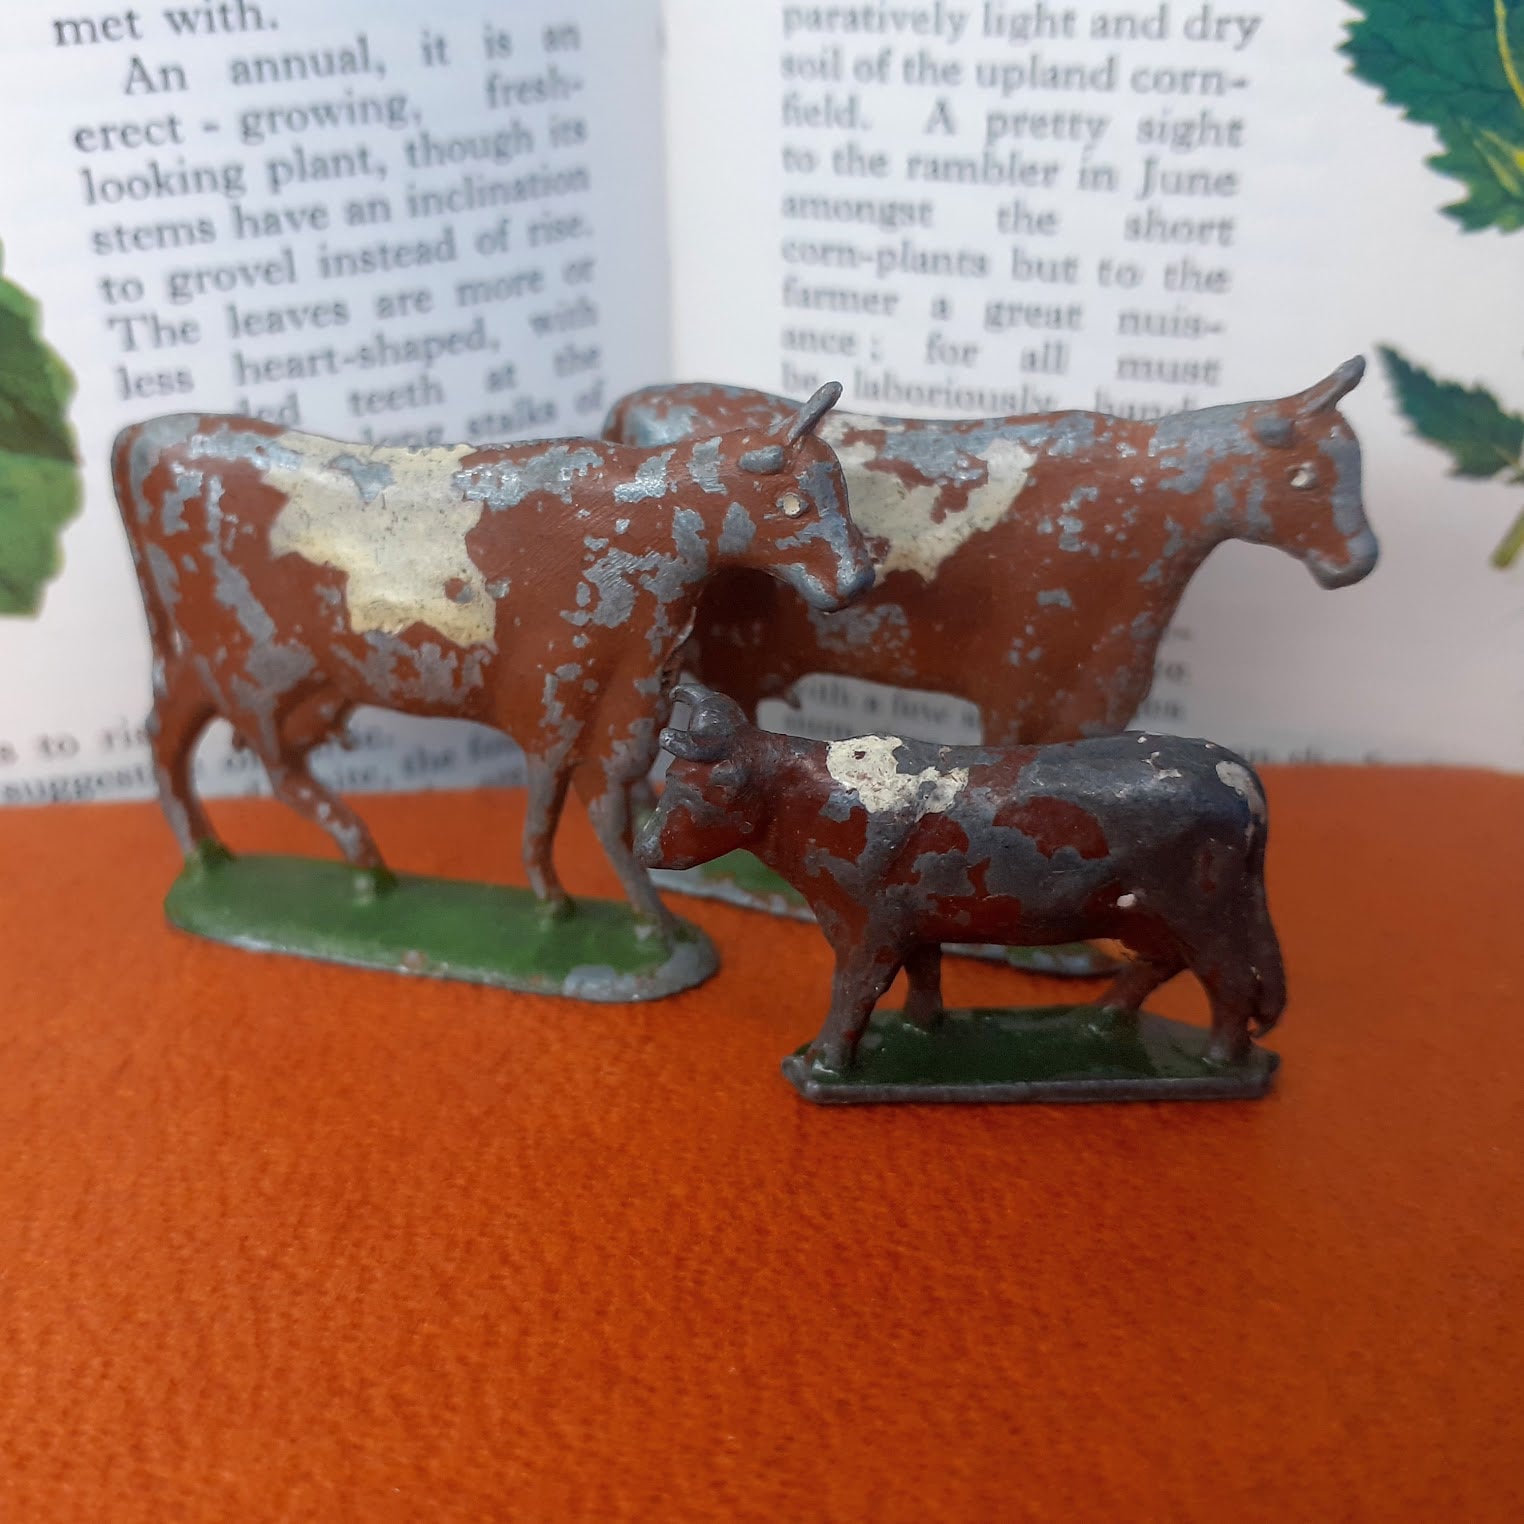 Miniature Supplies Mini Cows Farm Animals Set of 12 